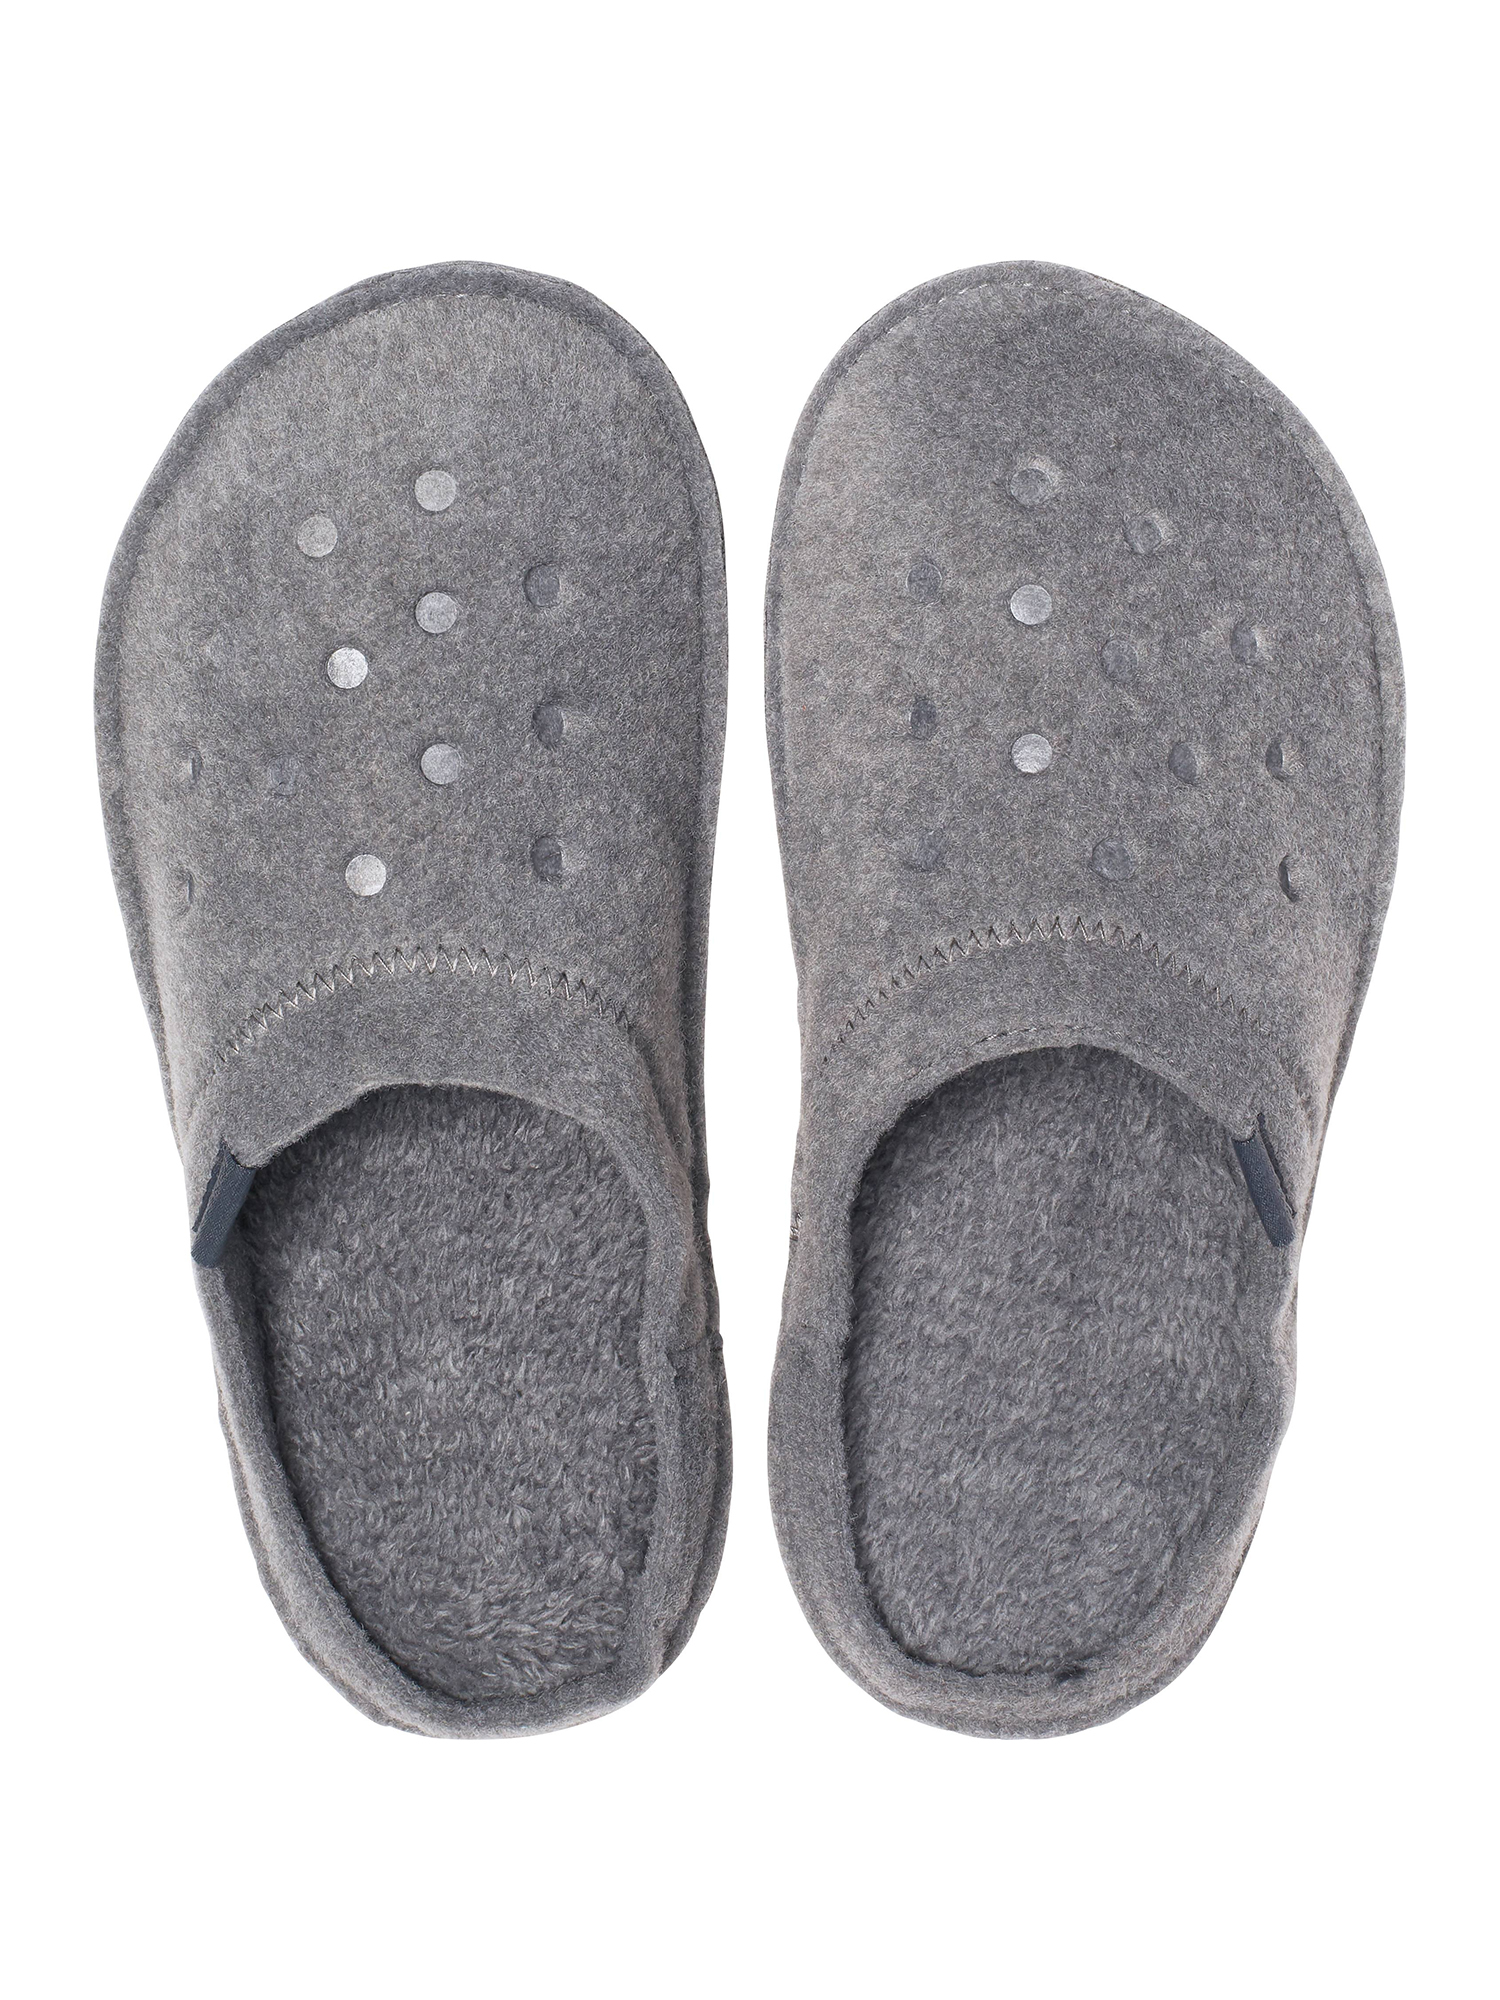 Crocs Unisex Classic Comfort Slippers - image 5 of 9